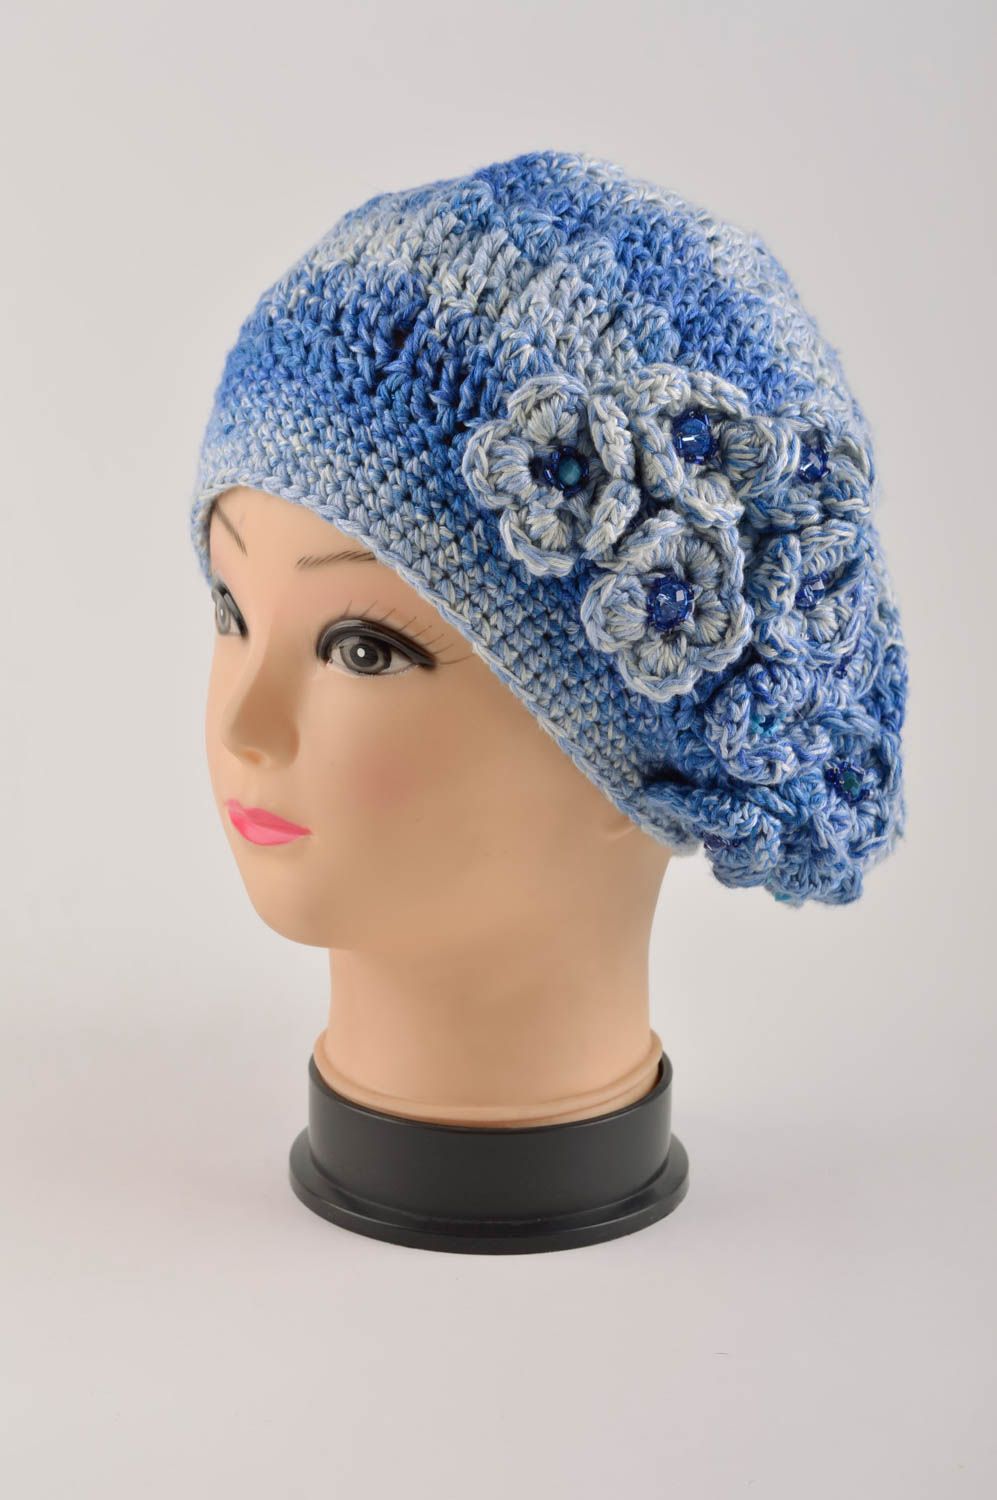 Handmade crochet hat designer accessories hats for women warm hat gifts for girl photo 2